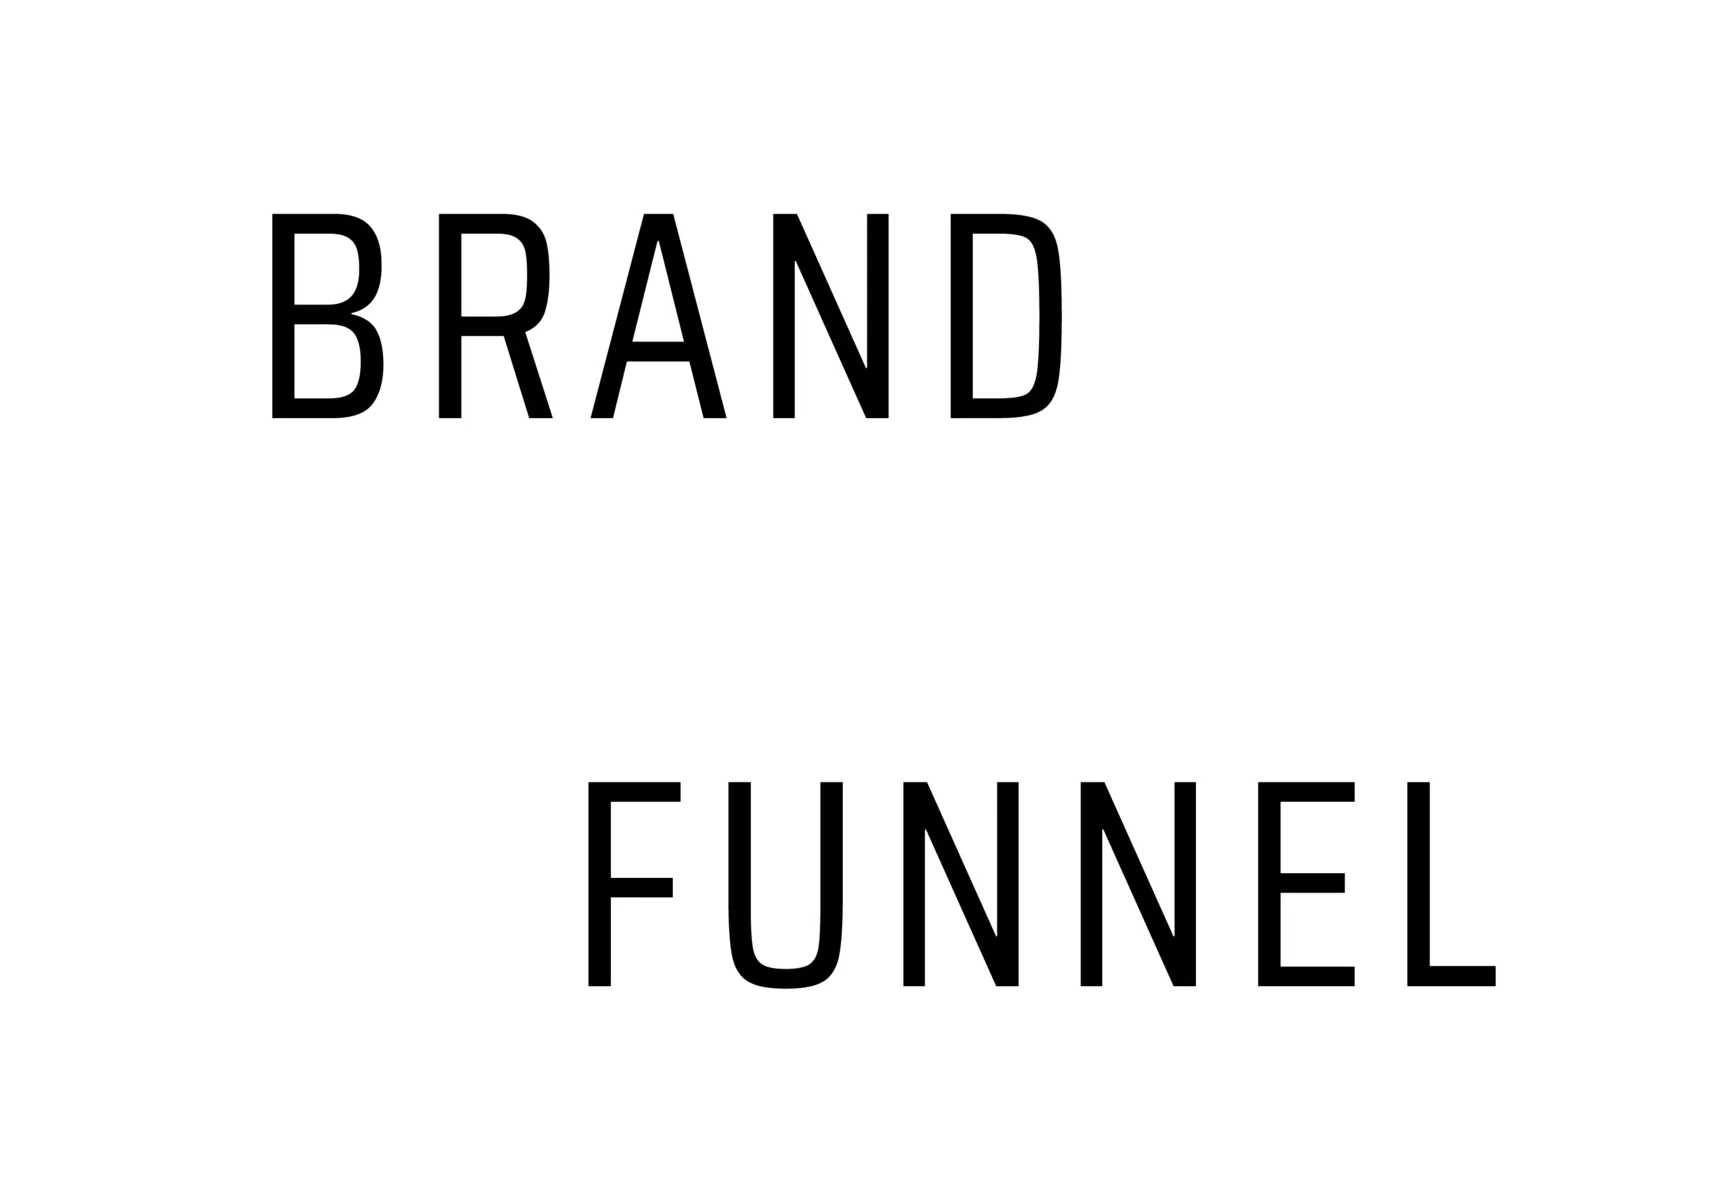 Brand Funnel